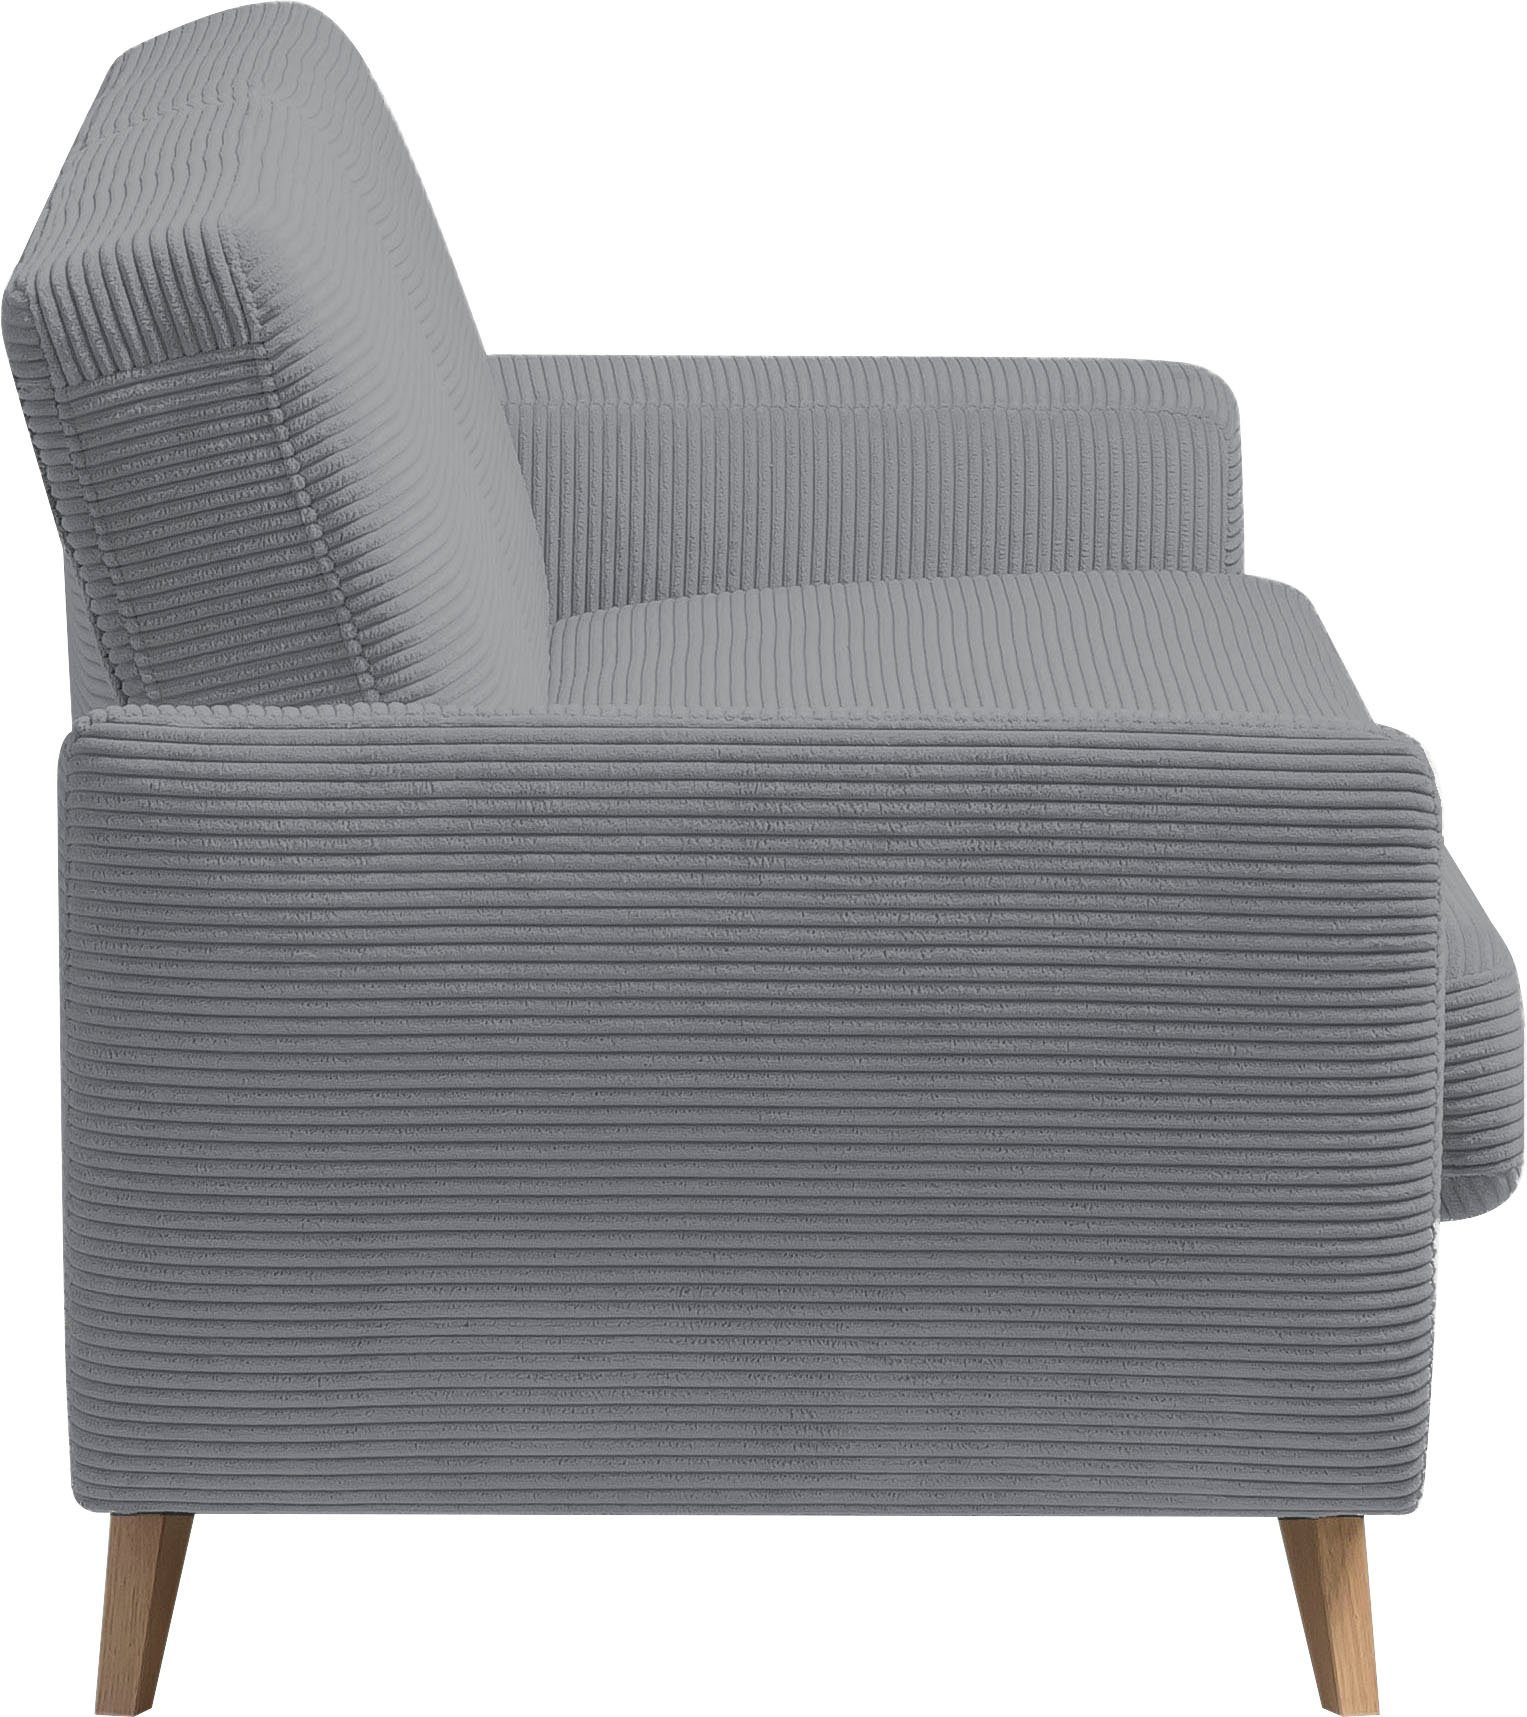 exxpo - sofa Bettfunktion Inklusive Bettkasten fashion Samso, und 3-Sitzer grey